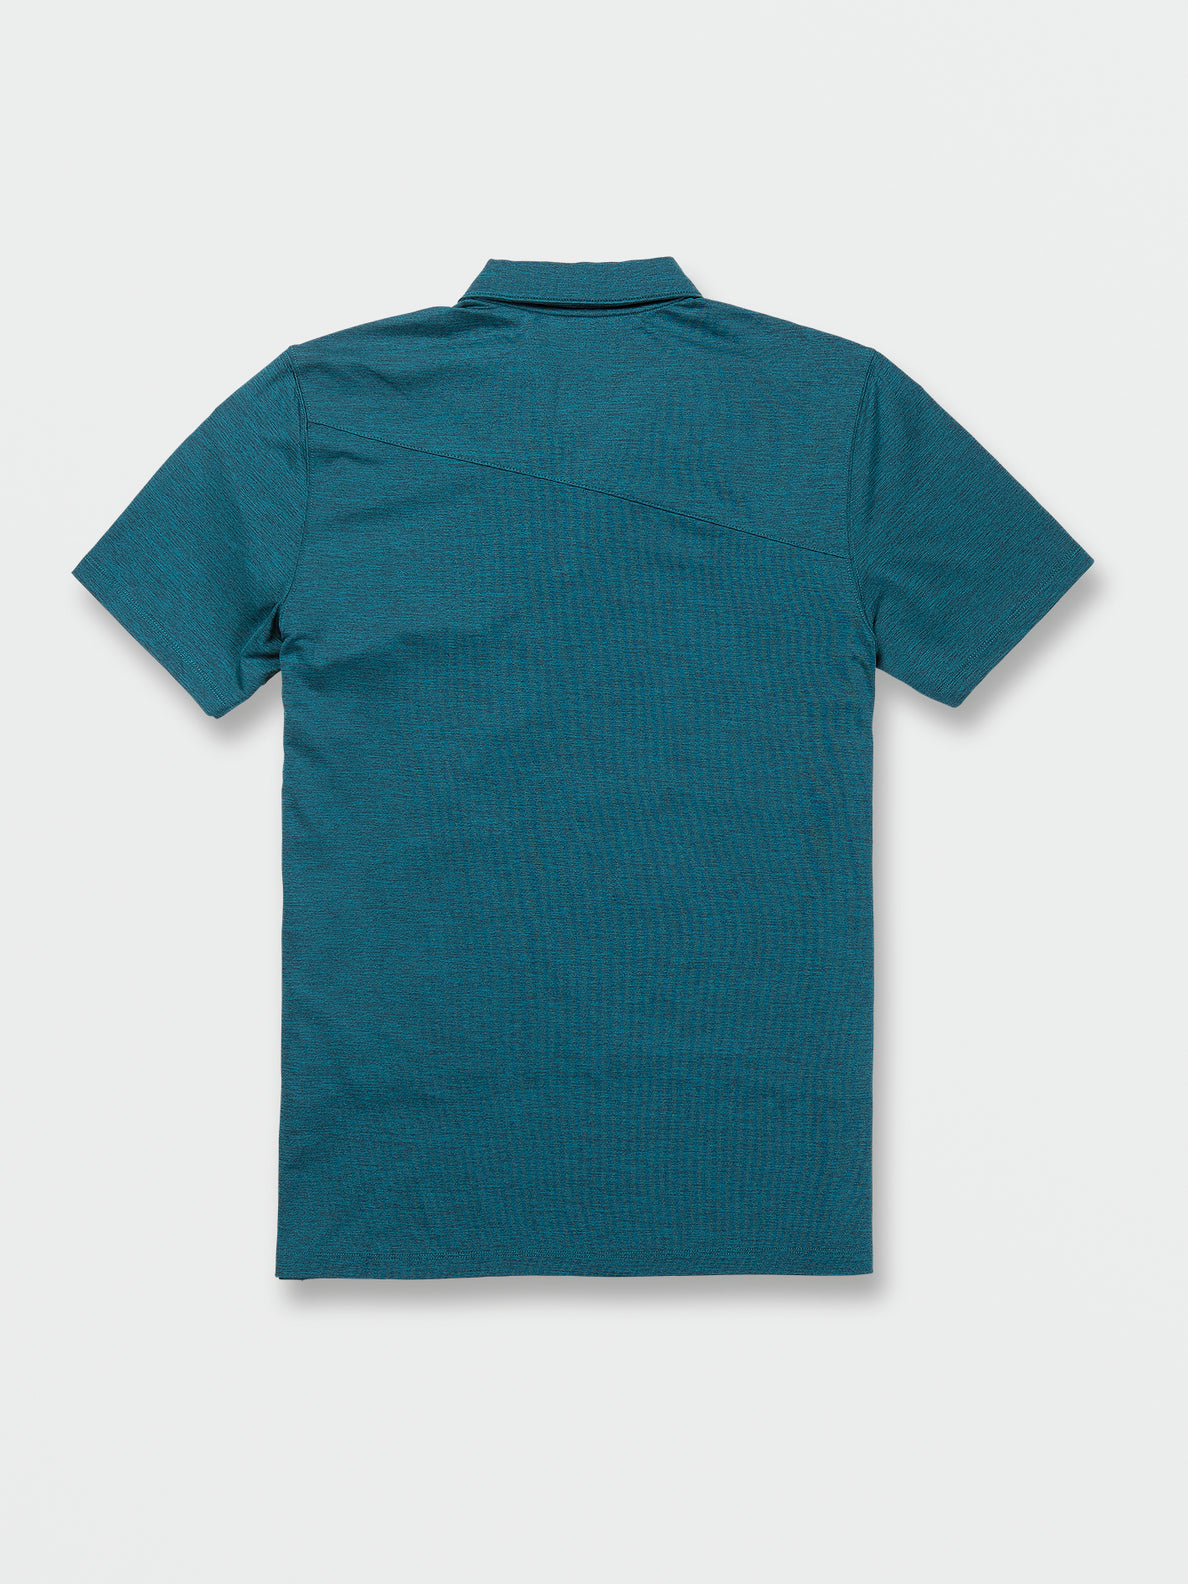 Hazard Pro Polo Short Sleeve Shirt - Ocean Teal